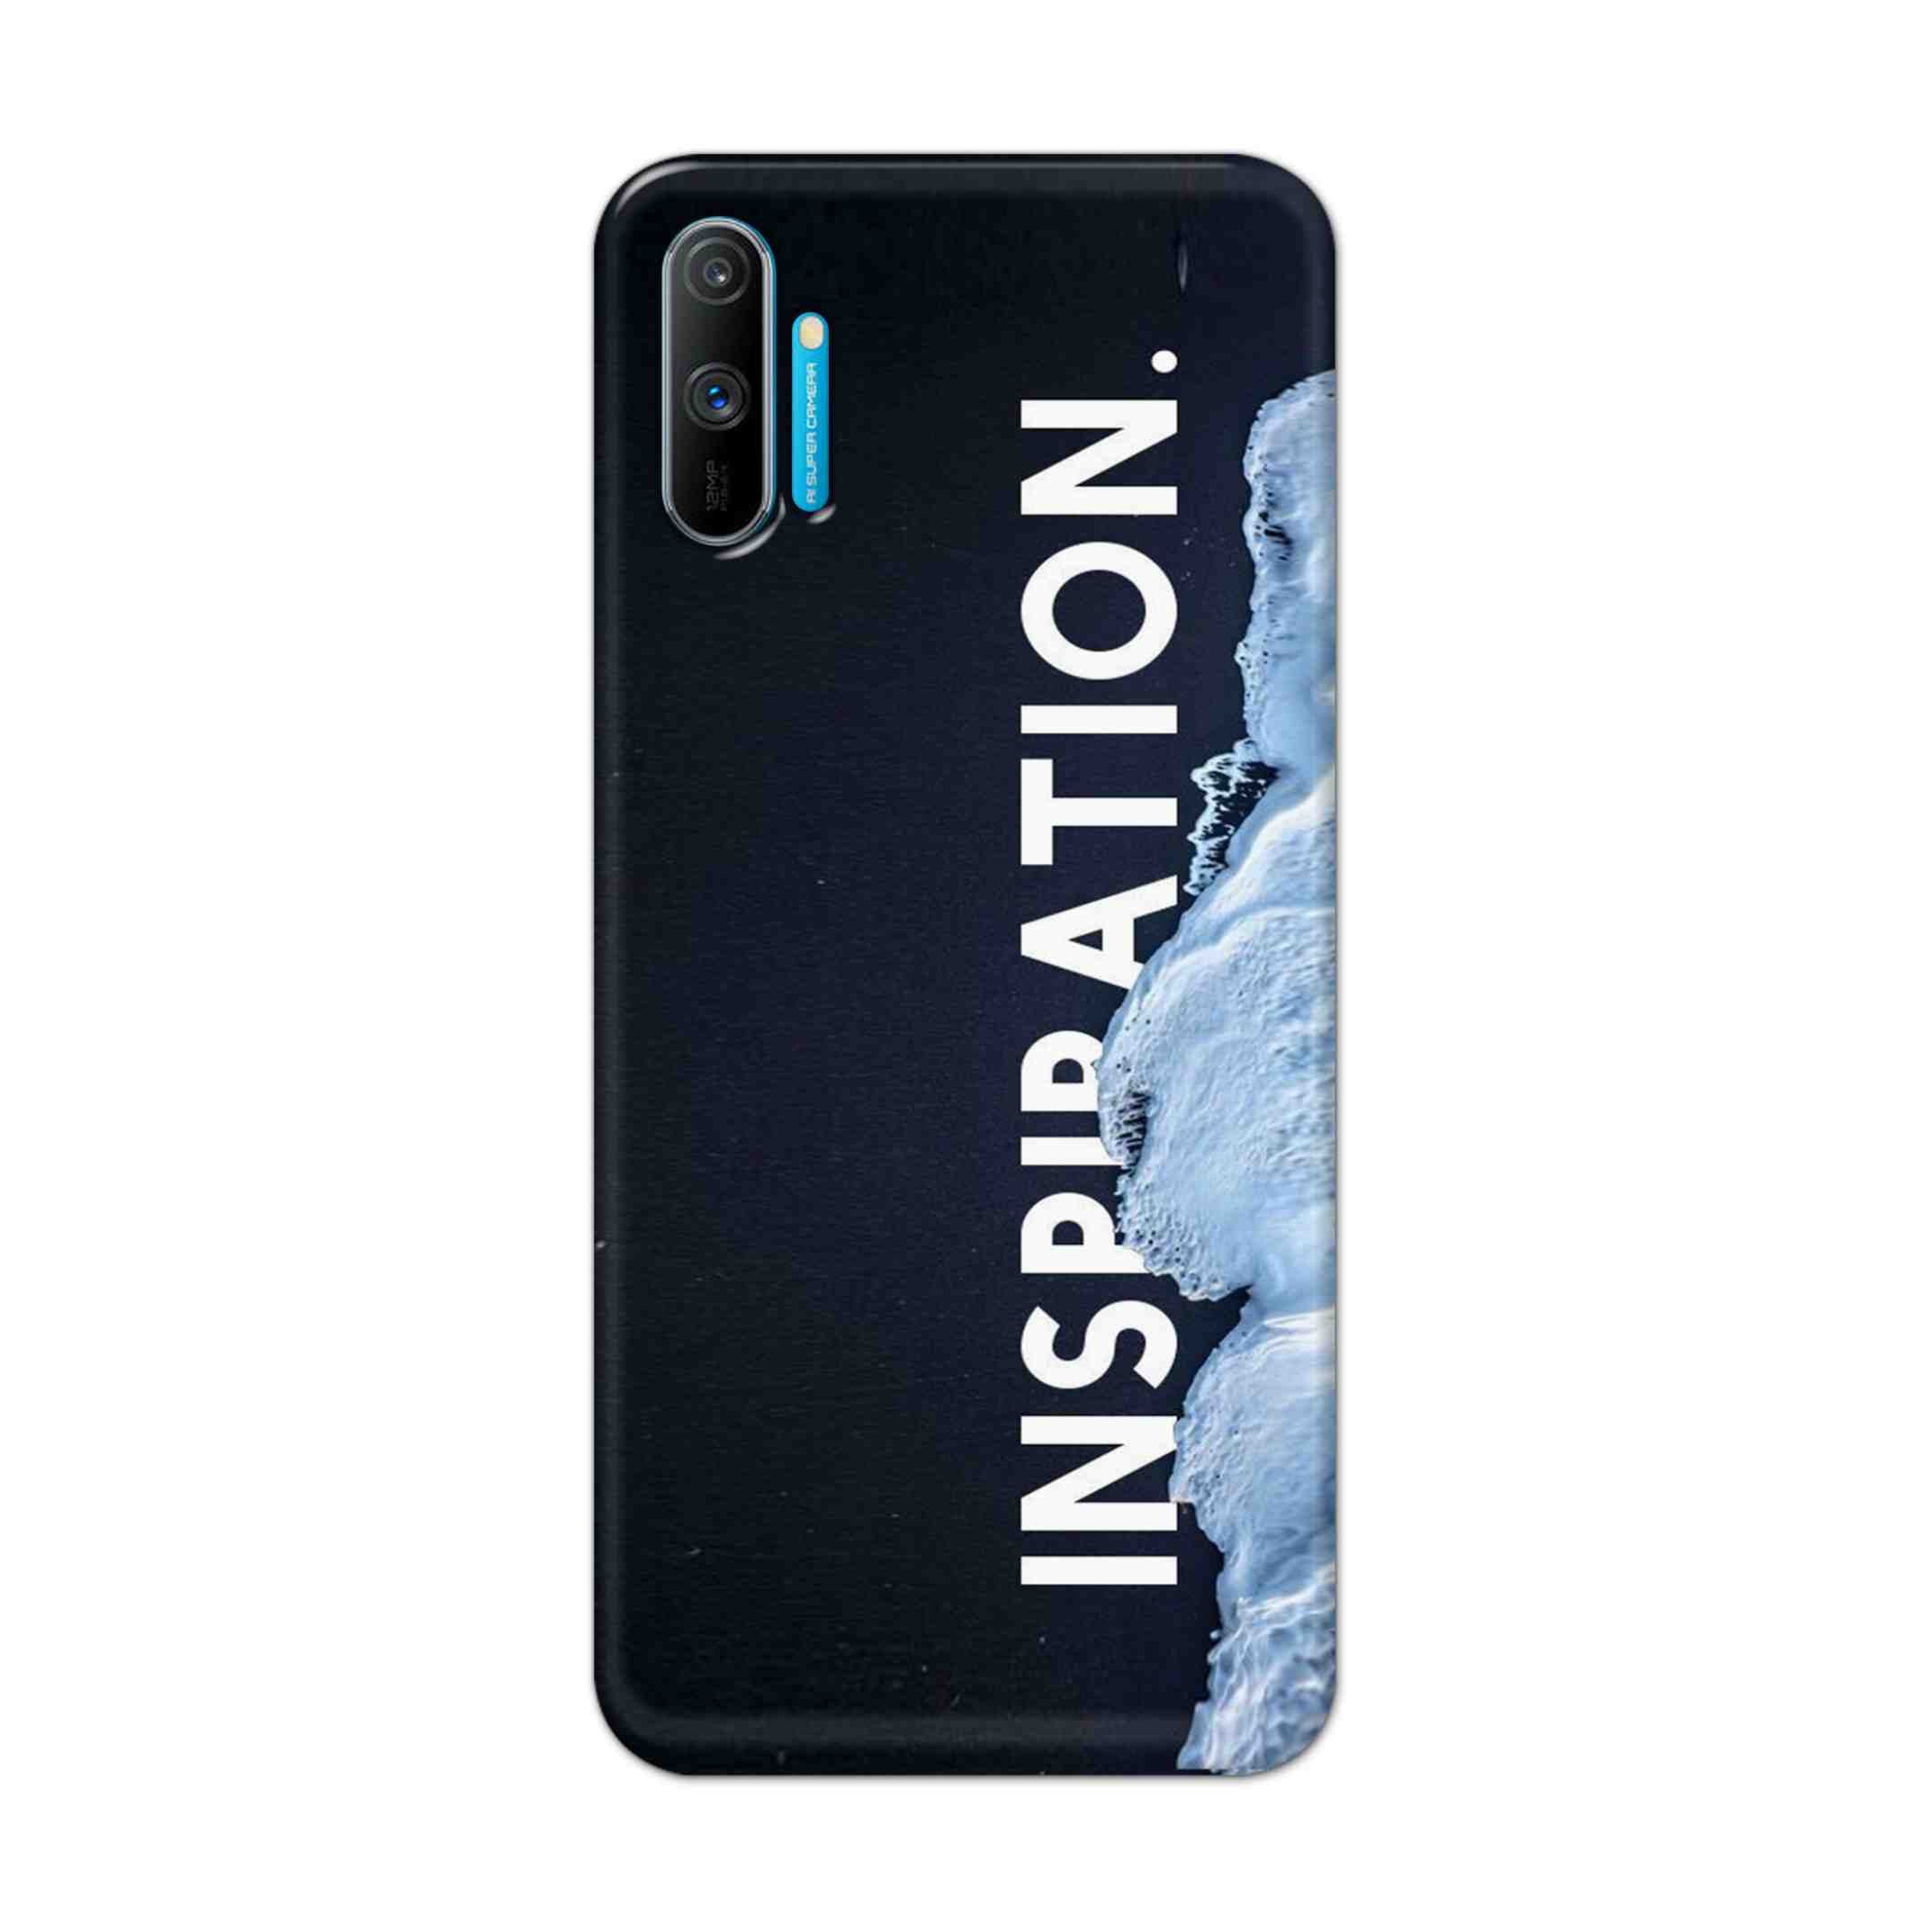 Buy Inspiration Hard Back Mobile Phone Case Cover For Realme C3 Online